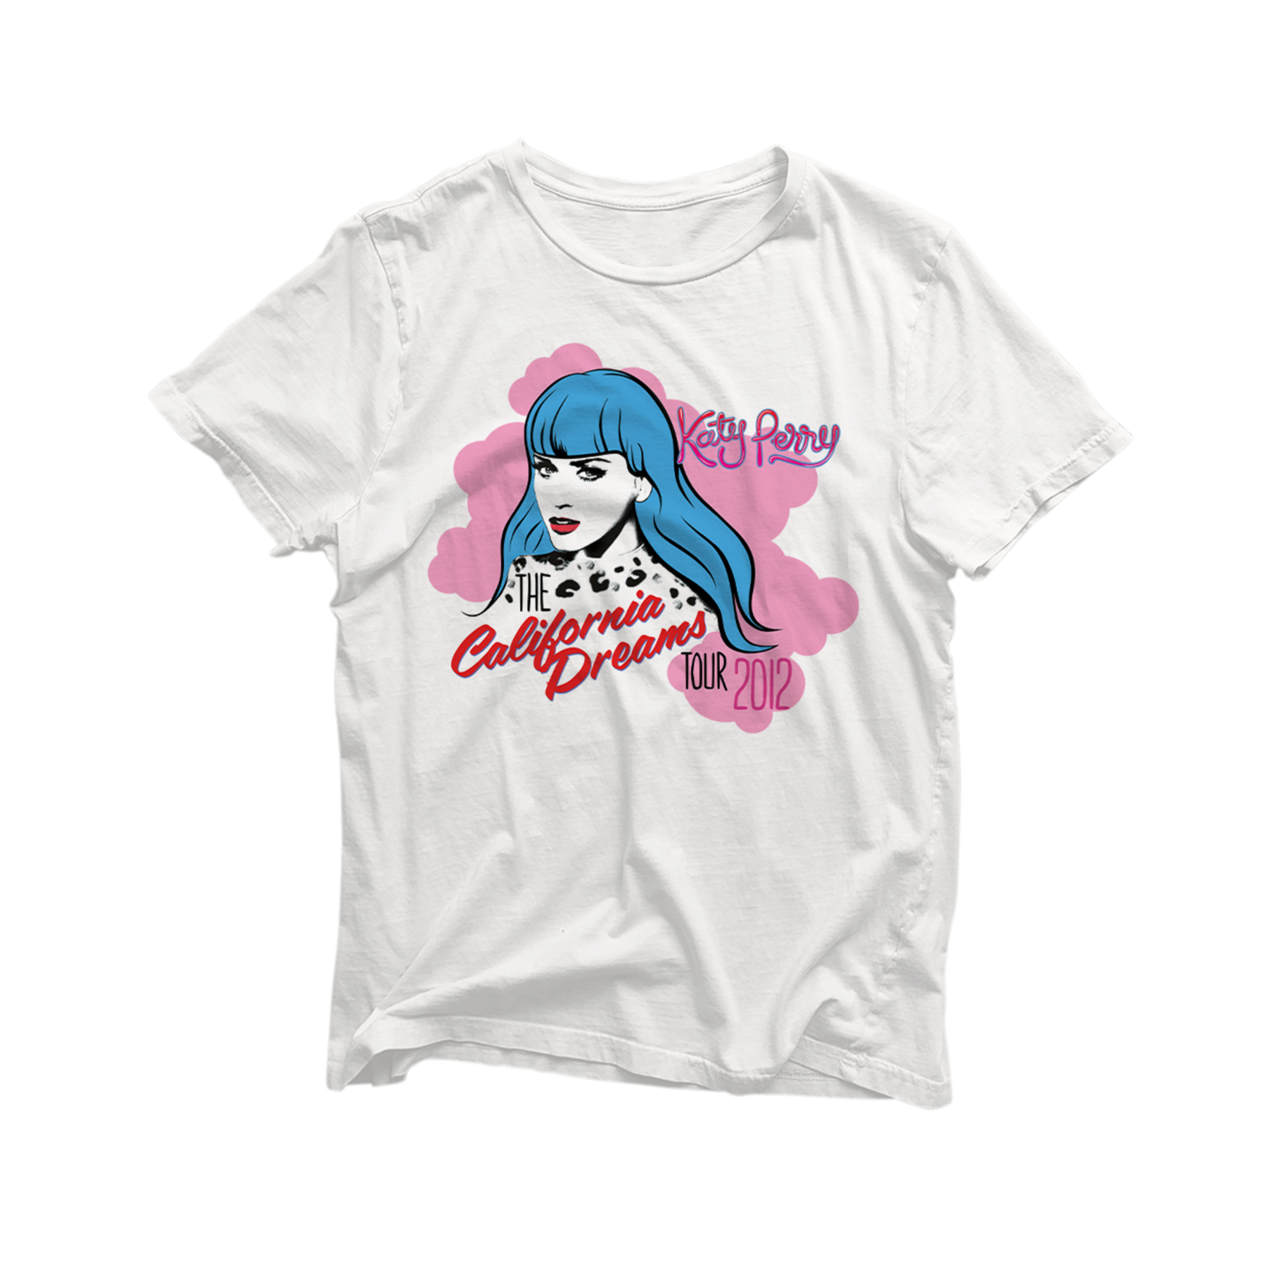 Katy Perry - California Dreams Tour T-Shirt